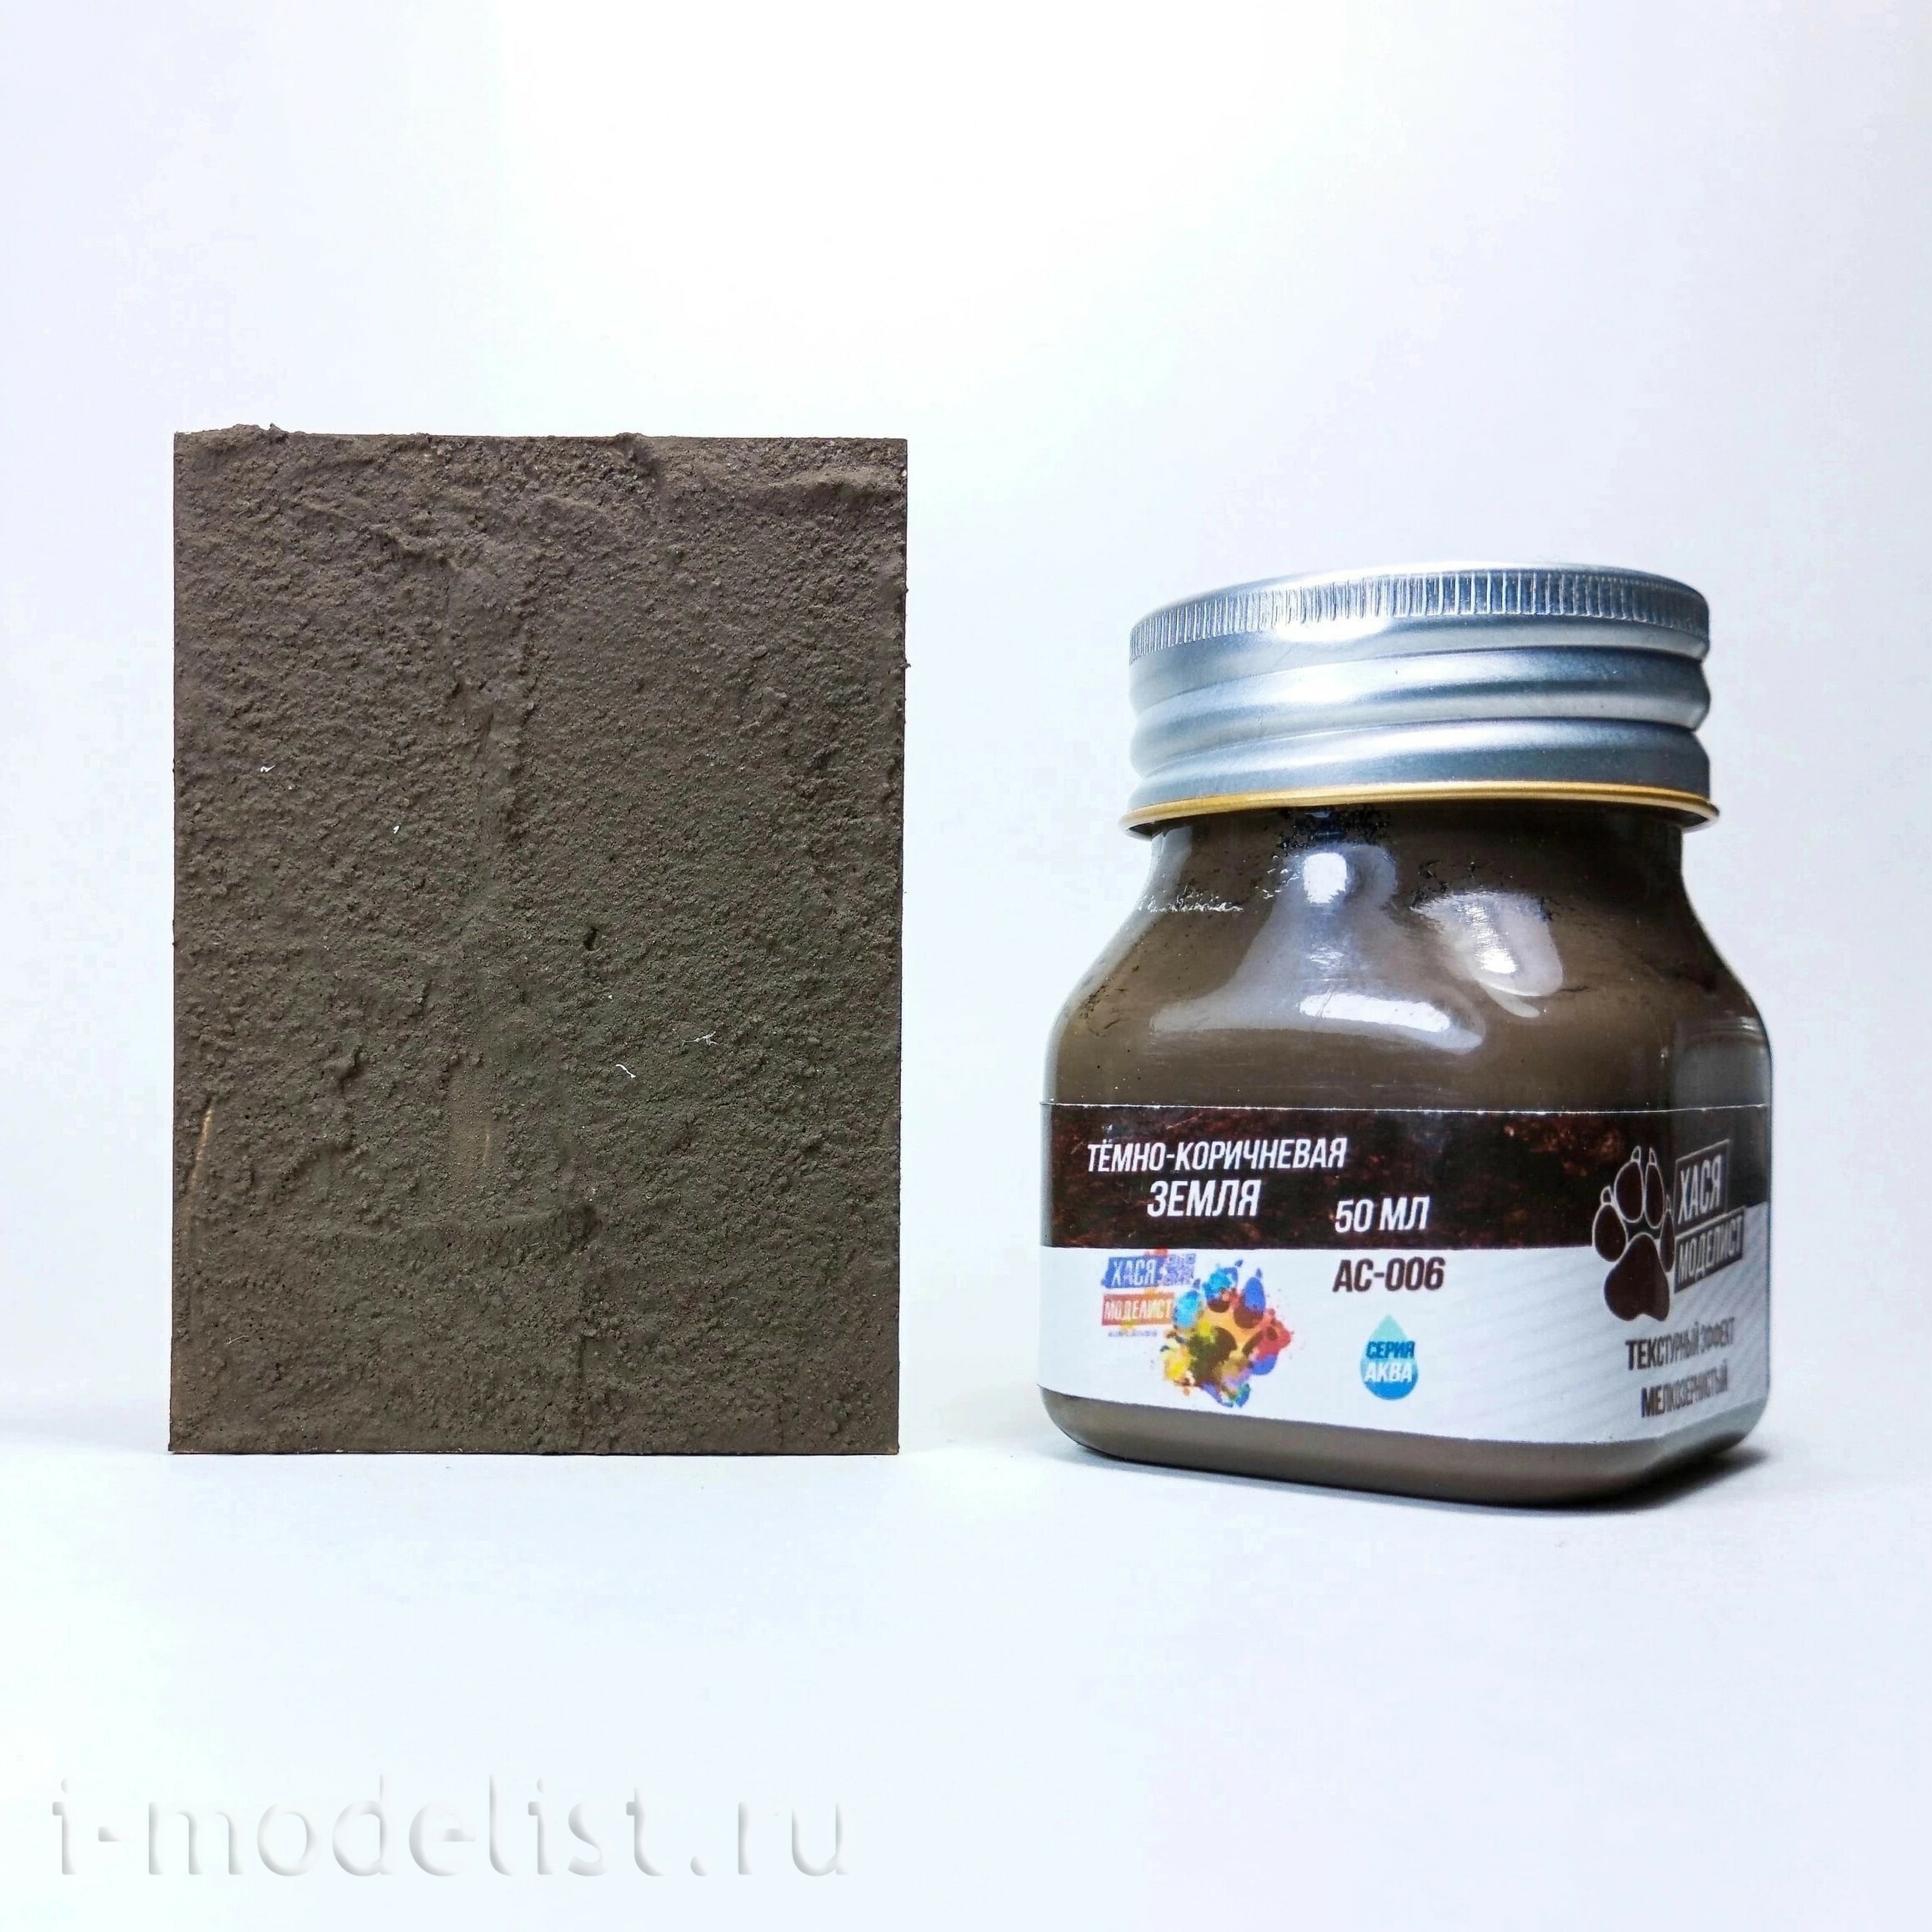 AS006 Hasya Modeler Acrylic mixture, dark brown Russian earth, fine-grained, 50 ml	